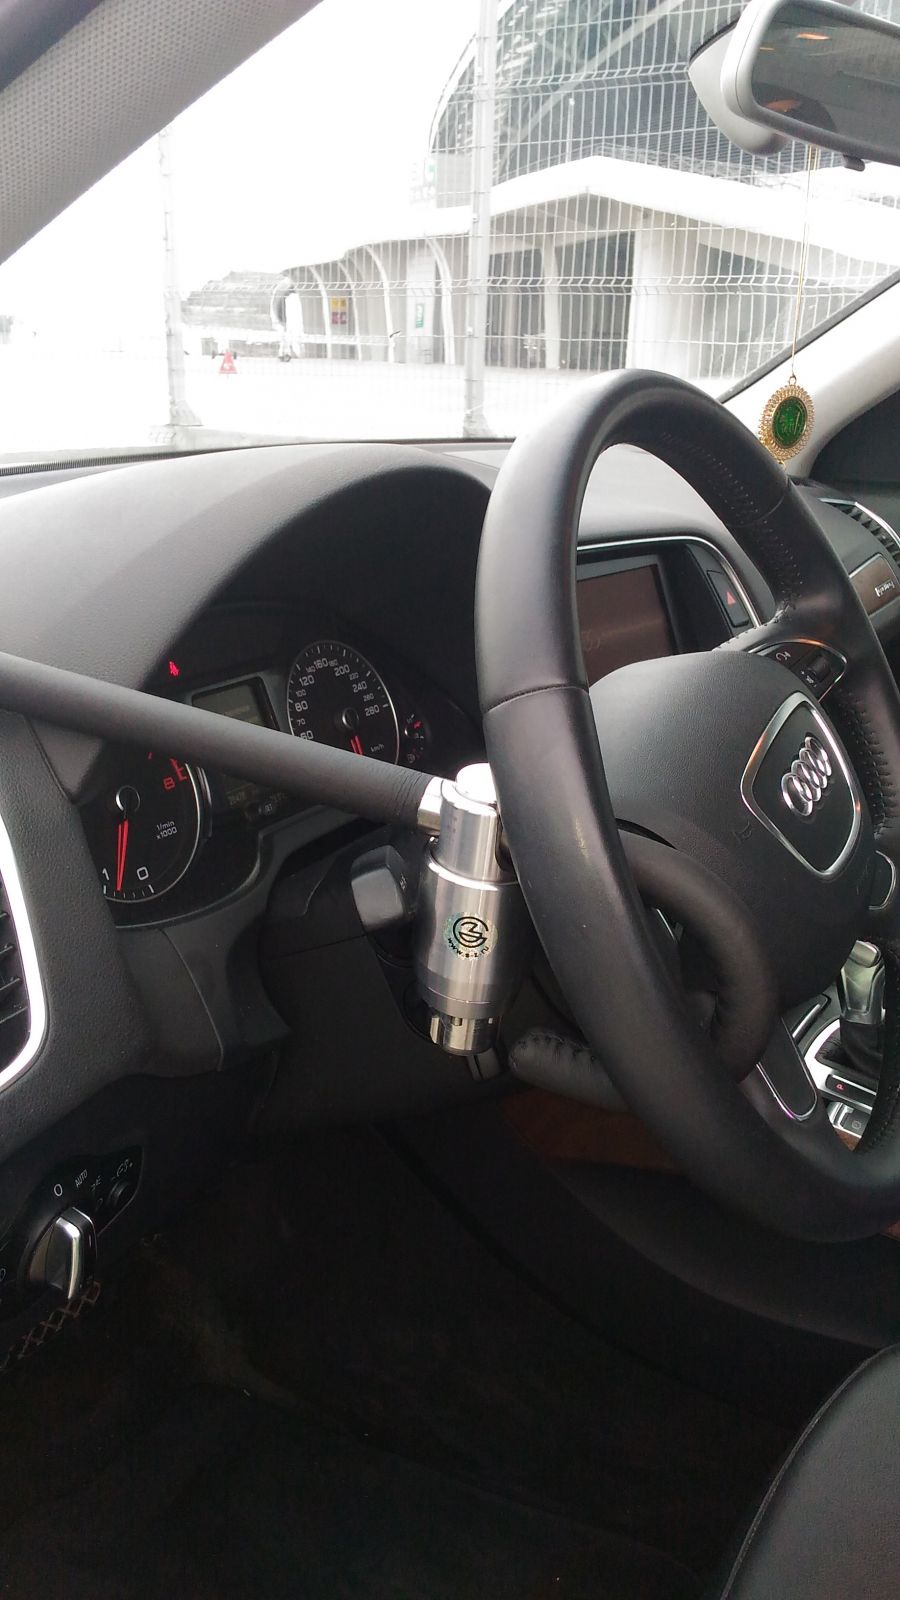 Блокиратор руля Питон установленный на автомобиле Audi Q5 2008-